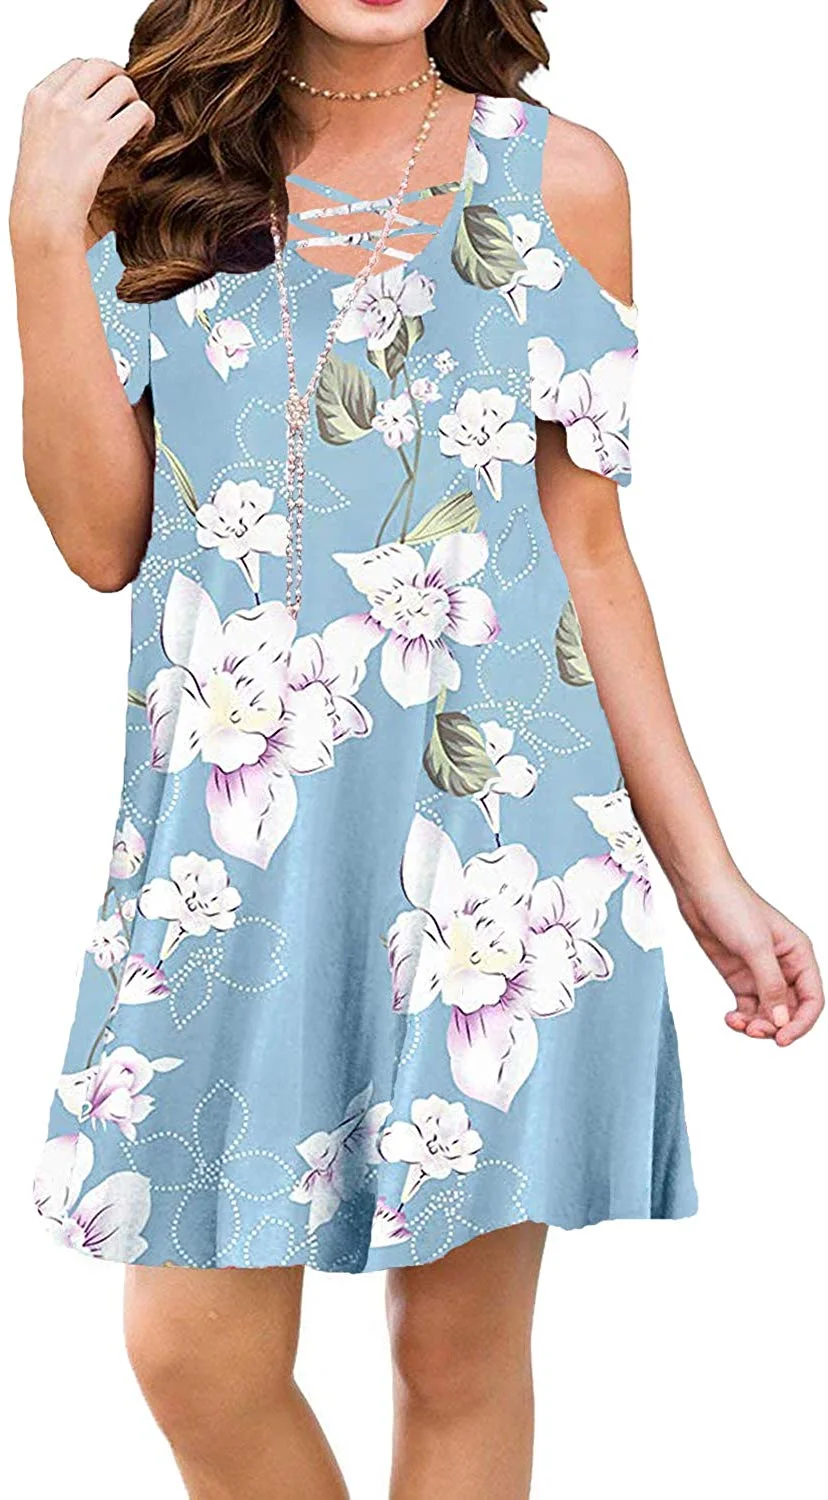 Summer Cold Shoulder Criss Cross Neckline Short Sleeve Casual Tunic Top Dress (S-3XL) for women